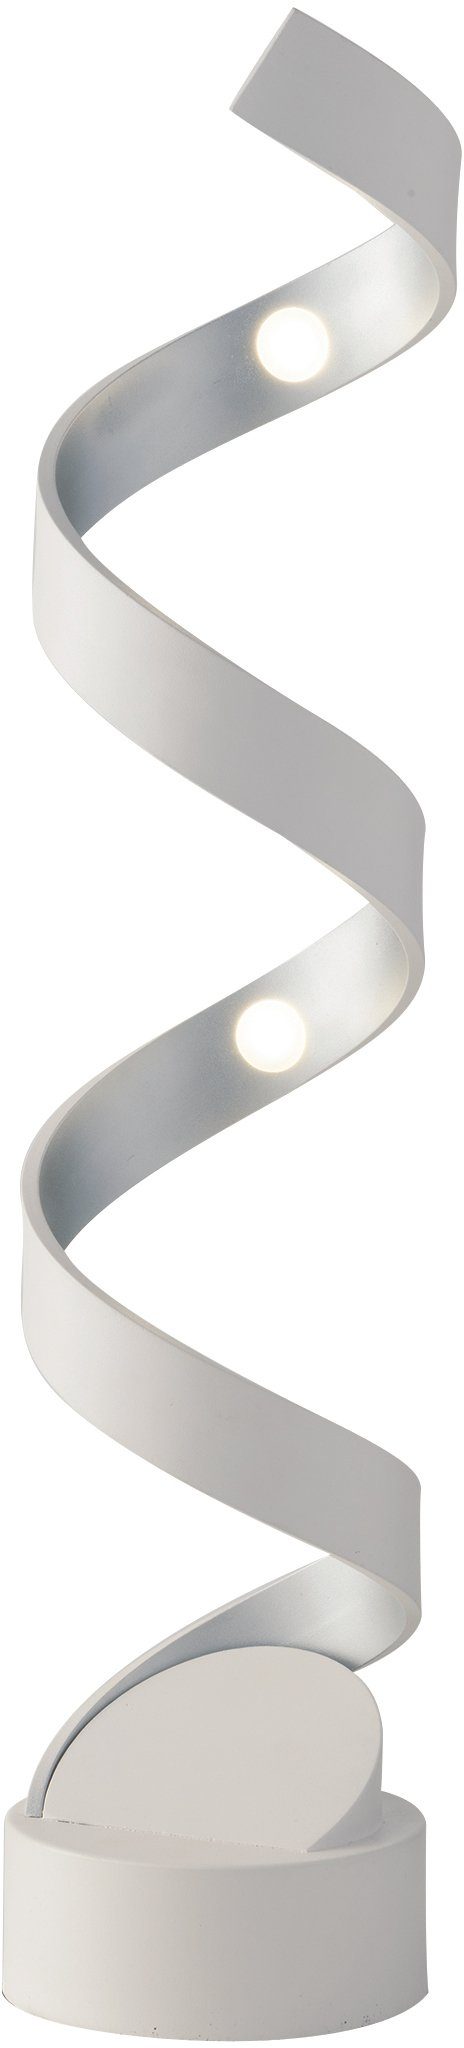 LUCE fest LED HELIX, integriert, Design Warmweiß LED Tischleuchte